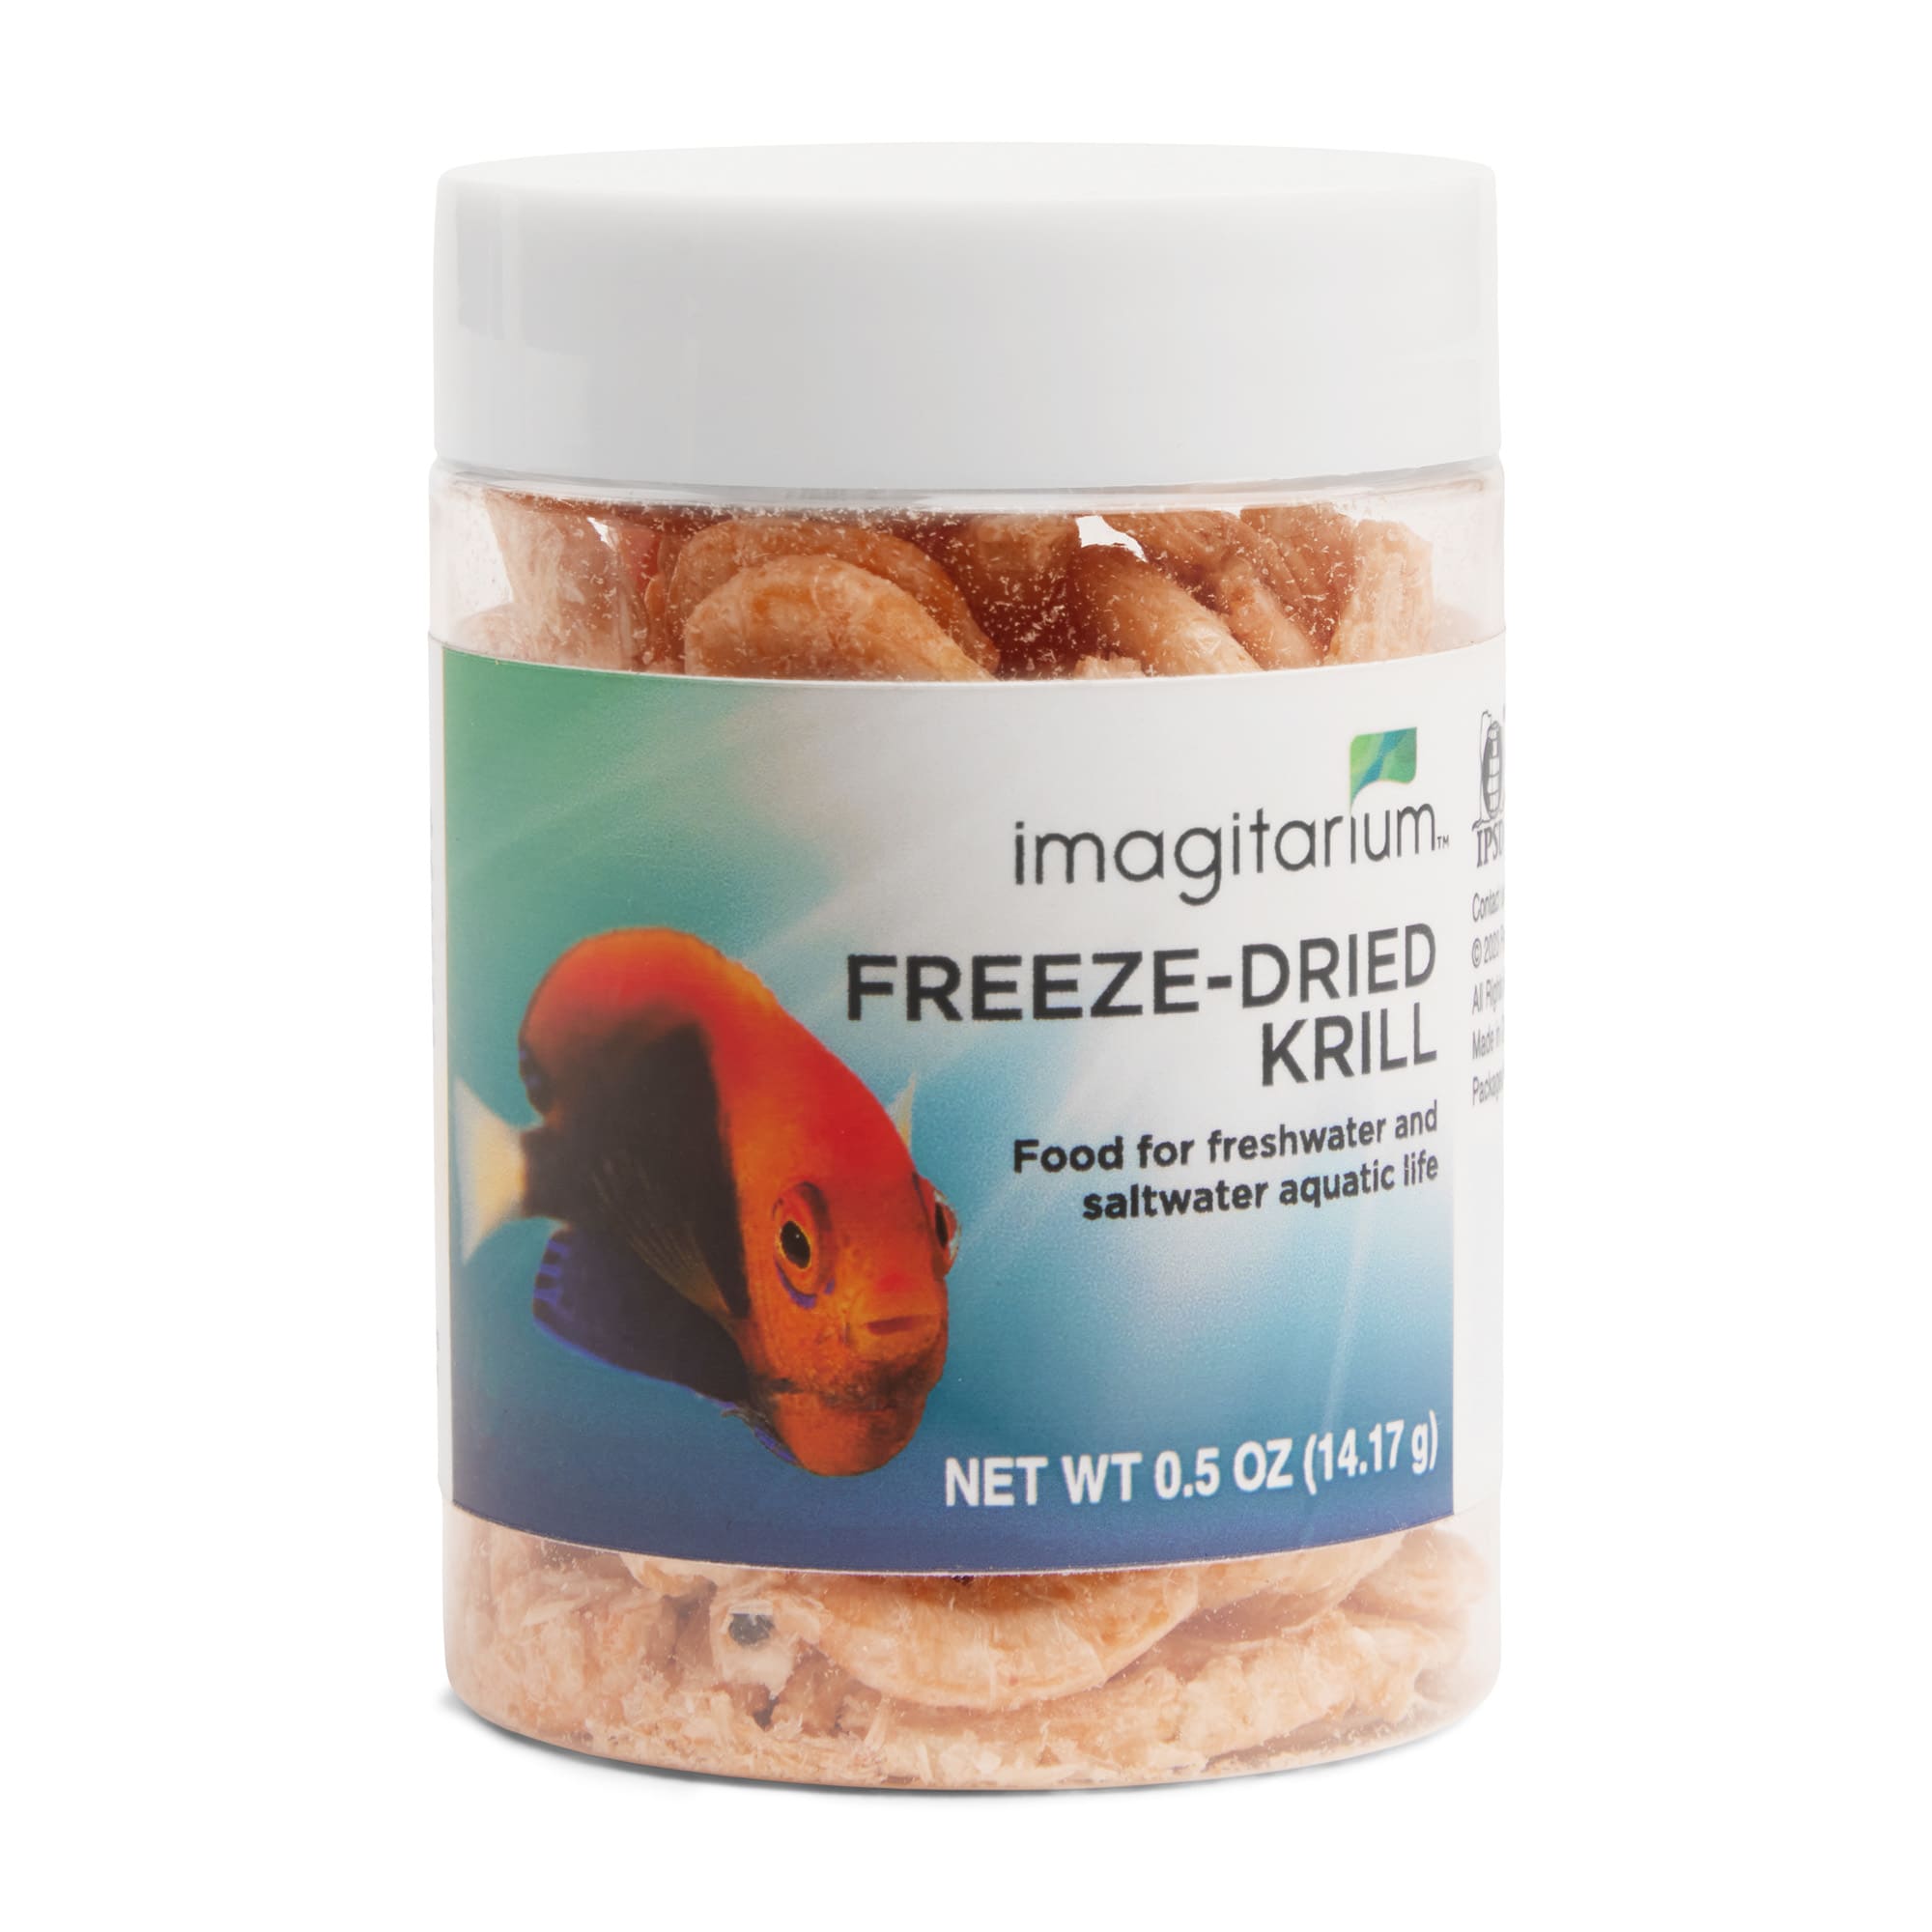 Imagitarium Freeze-Dried Krill Food for Freswater and Salt Water Aquatic  Life, 0.5 oz.